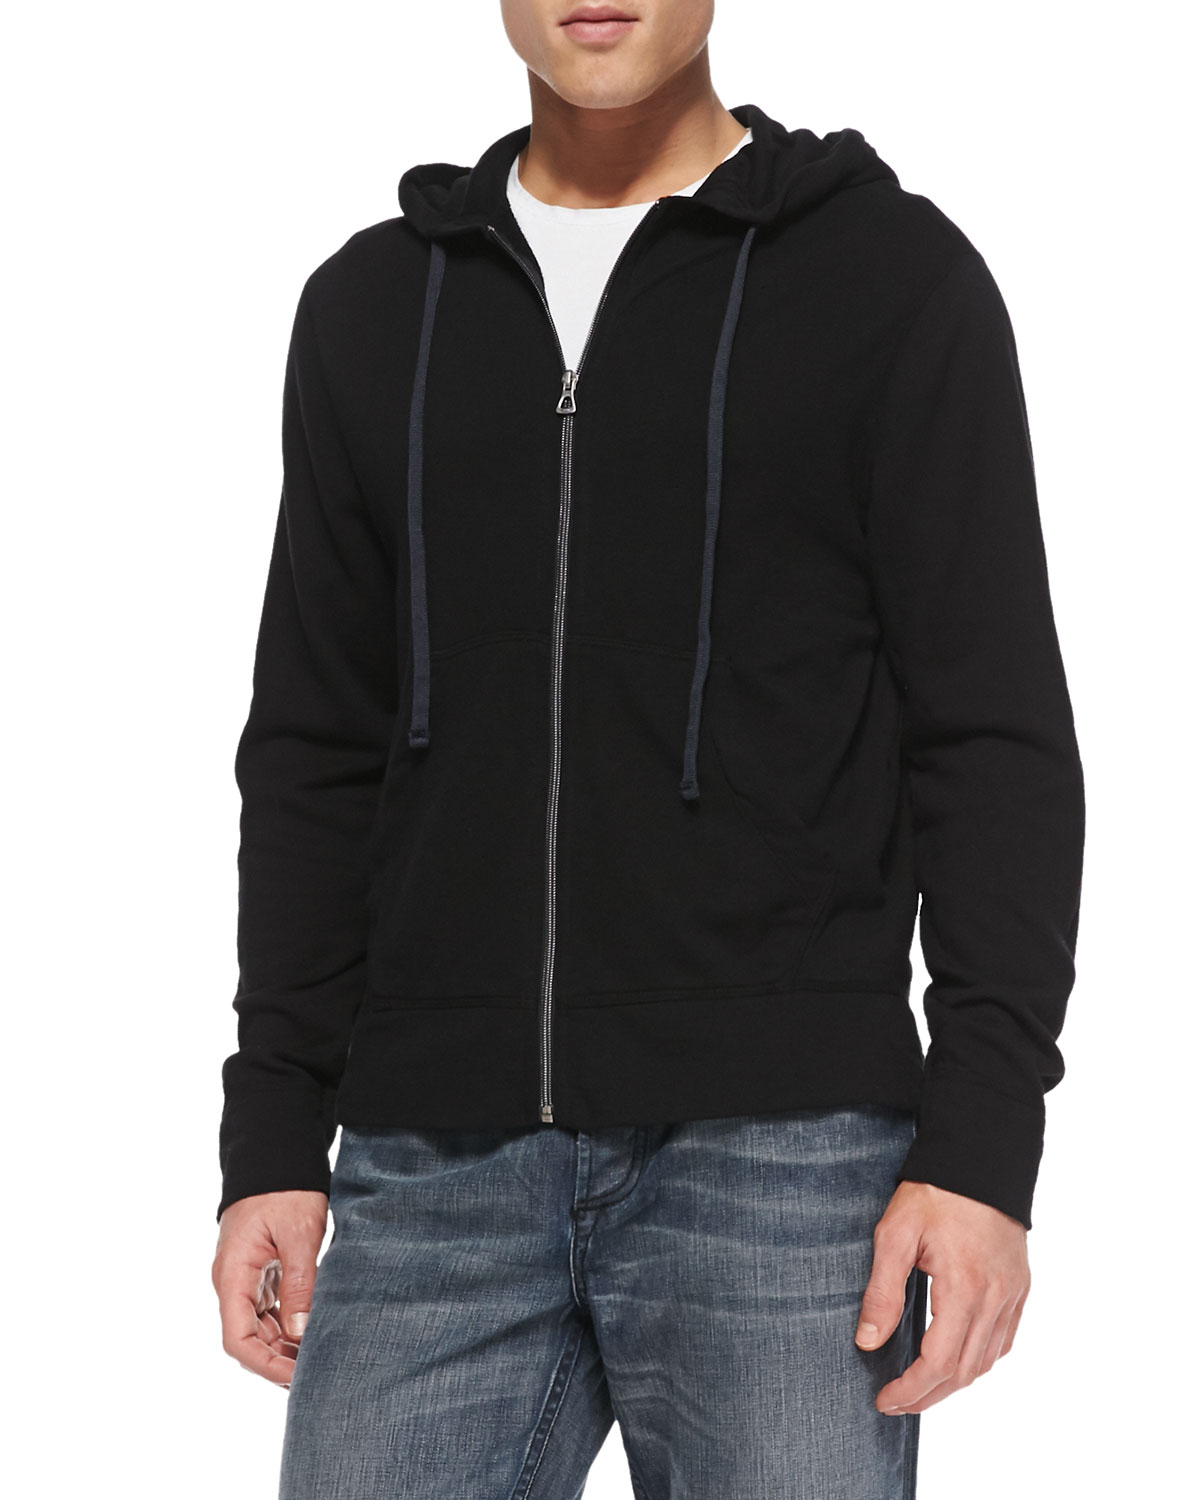 James Perse Cotton-Knit Zip Hoodie in Black | Lyst